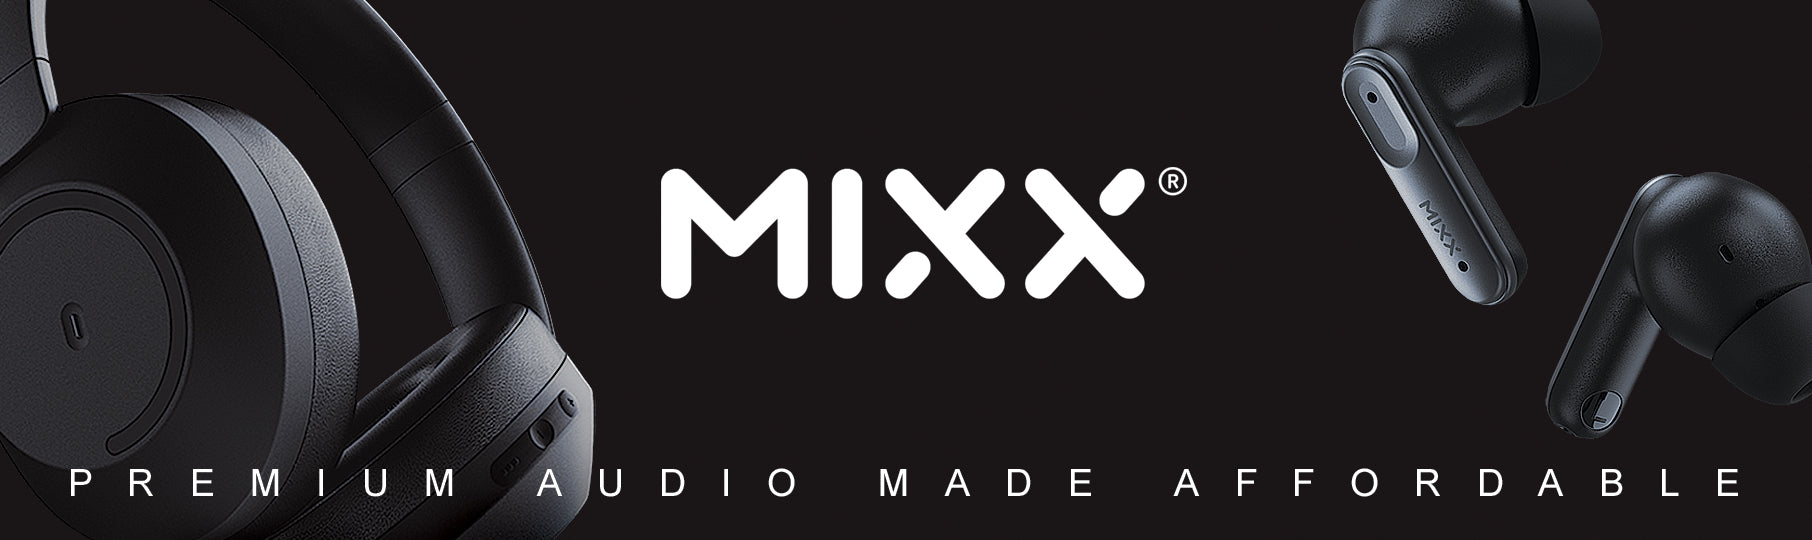 MIXX Audio Collection - Shop Now!